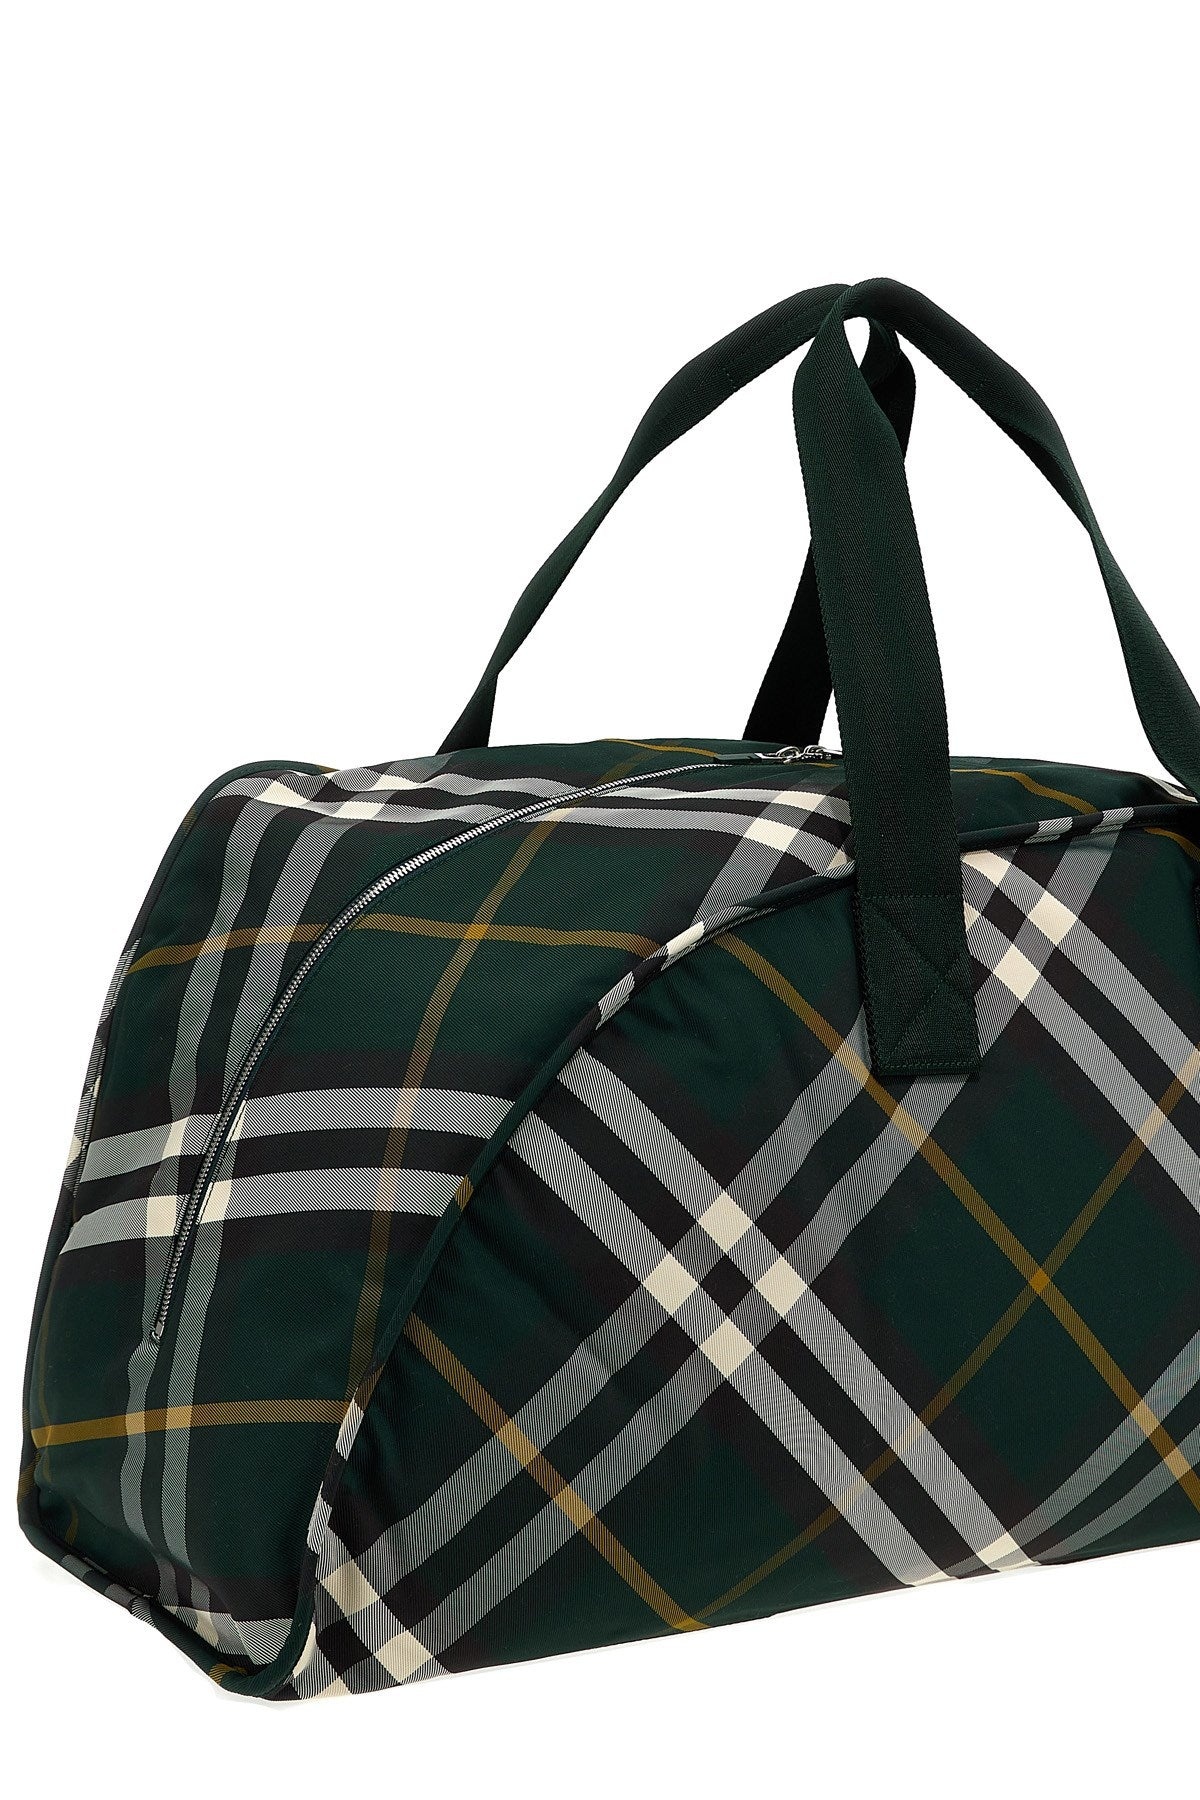 Burberry Men 'Shield' Large Travel Bag - 3